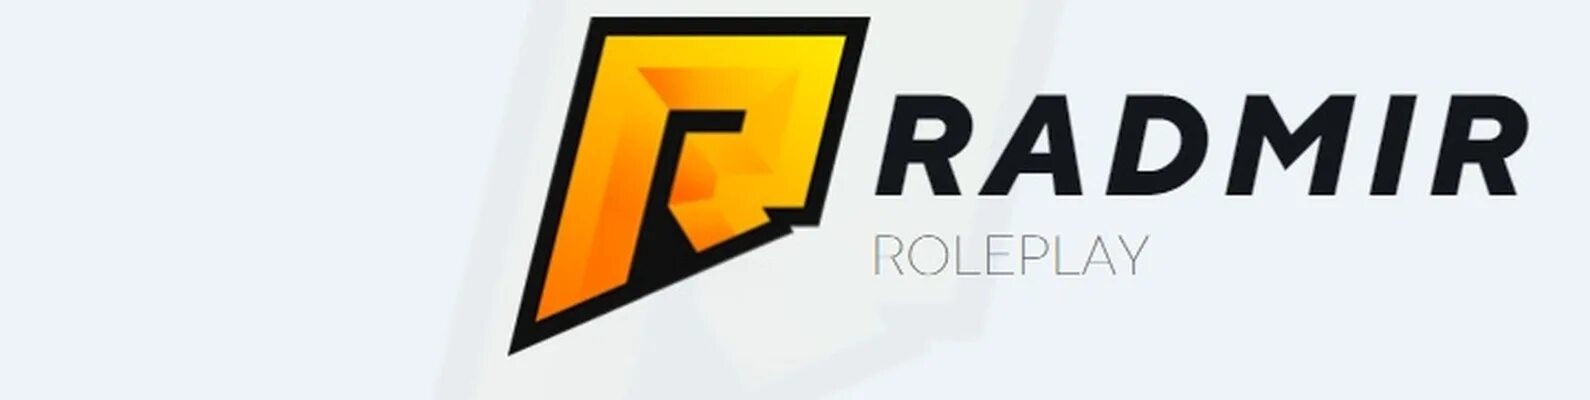 Radmir forum crmp. Радмир. Логотип Радмира. Рпдмир р. Логотип RADMIR Rp.